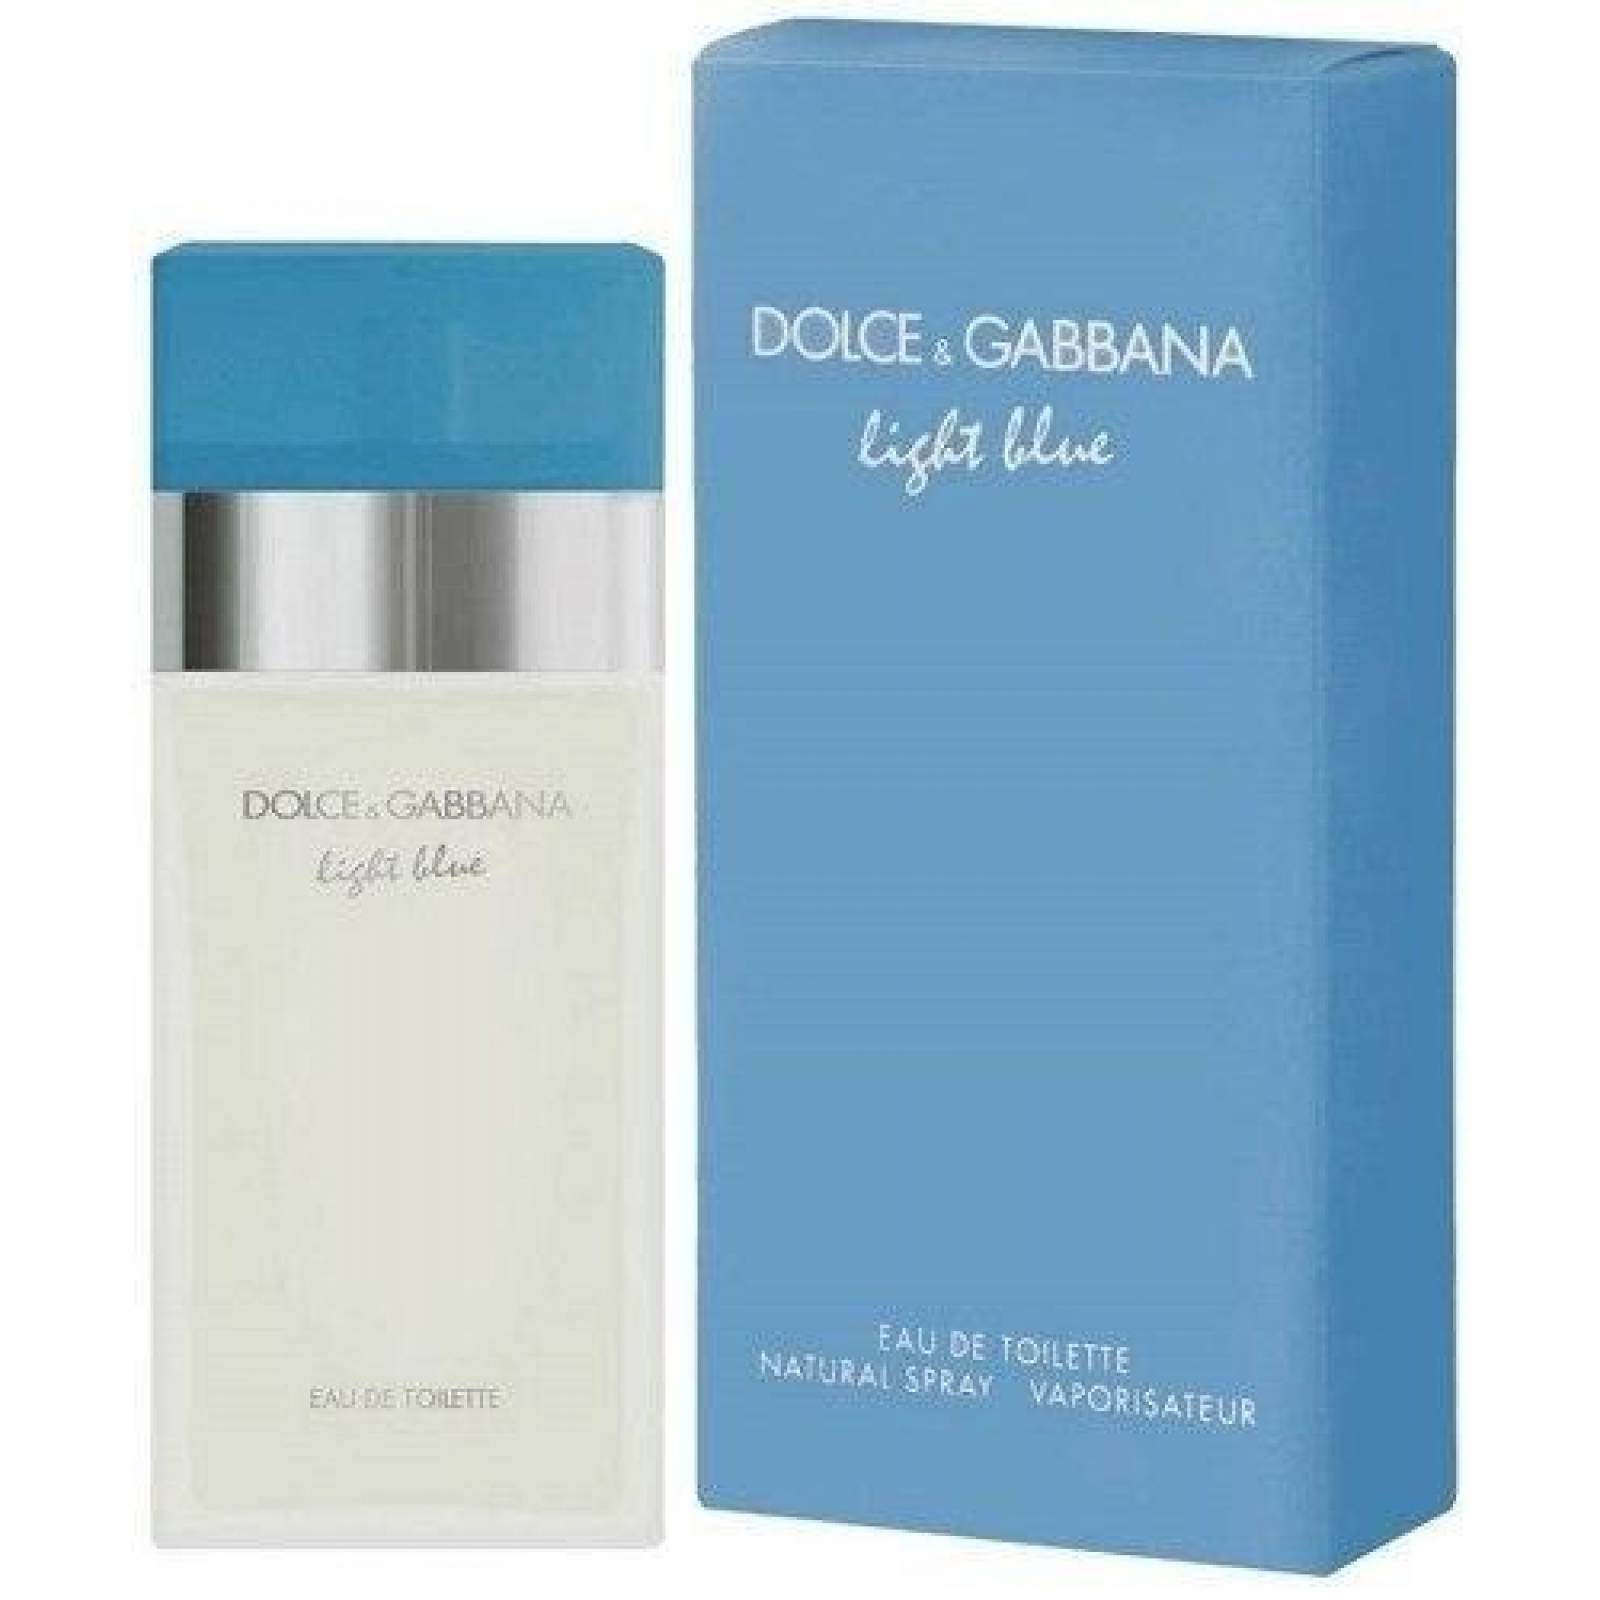 Light Blue Dama 100 Ml Dolce Gabbana Edt Spray Original